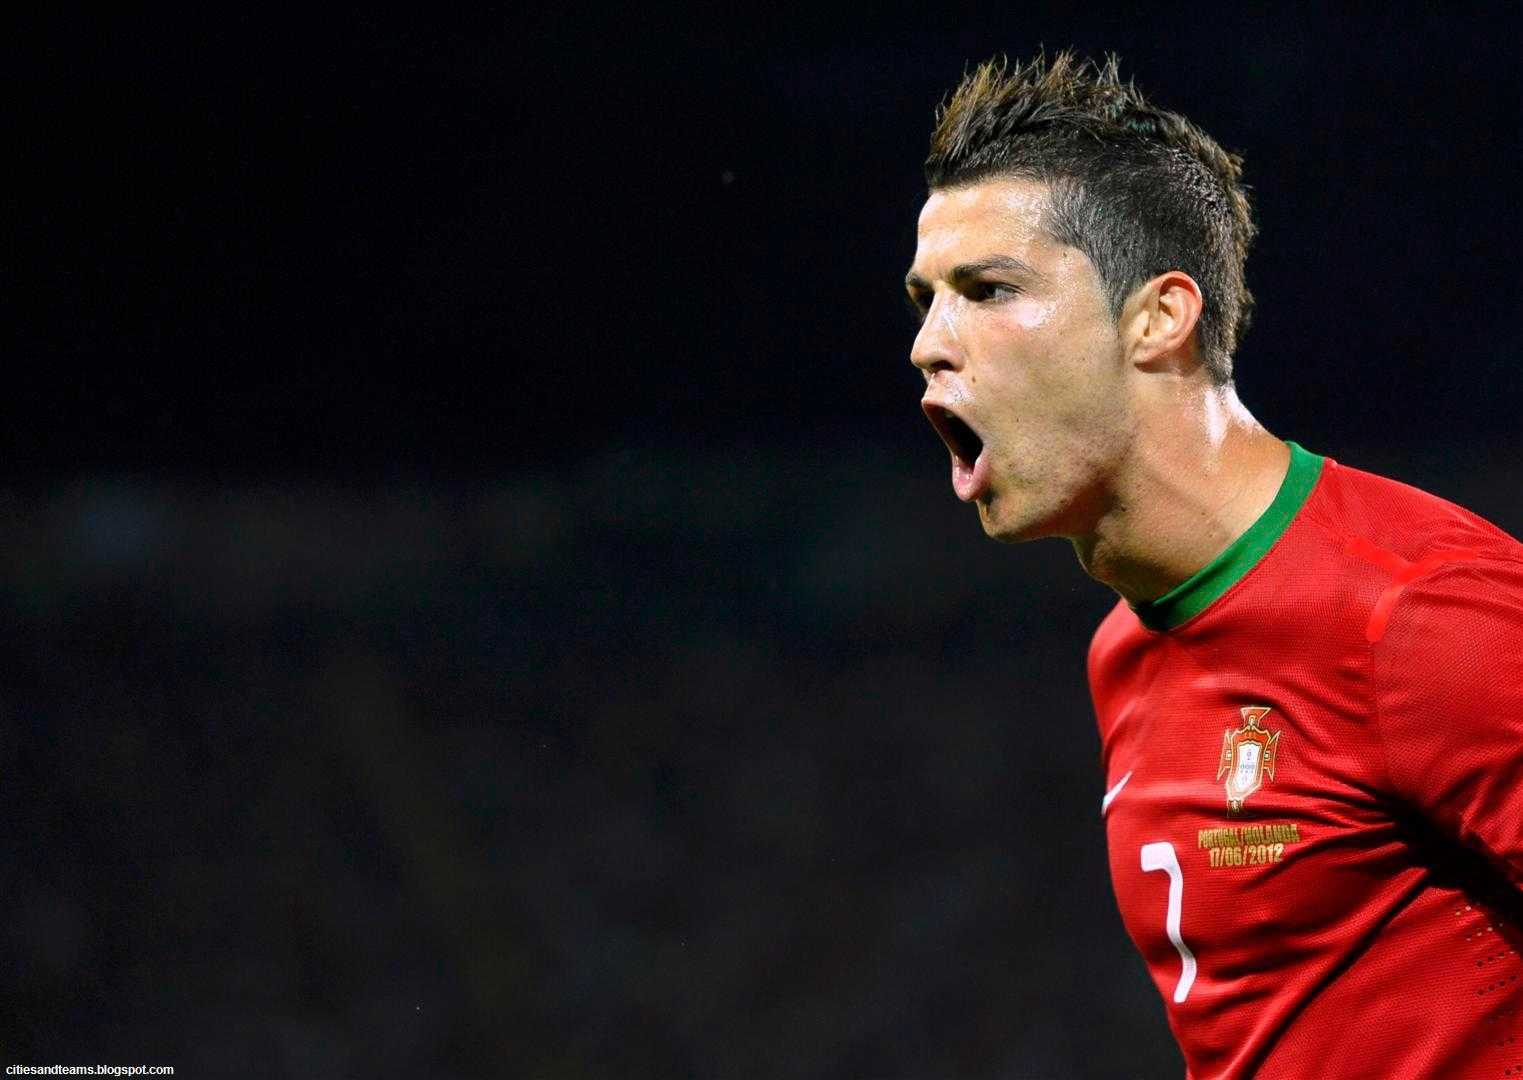 Ronaldo Portugal Wallpaper World Cup Ronaldo Image Download